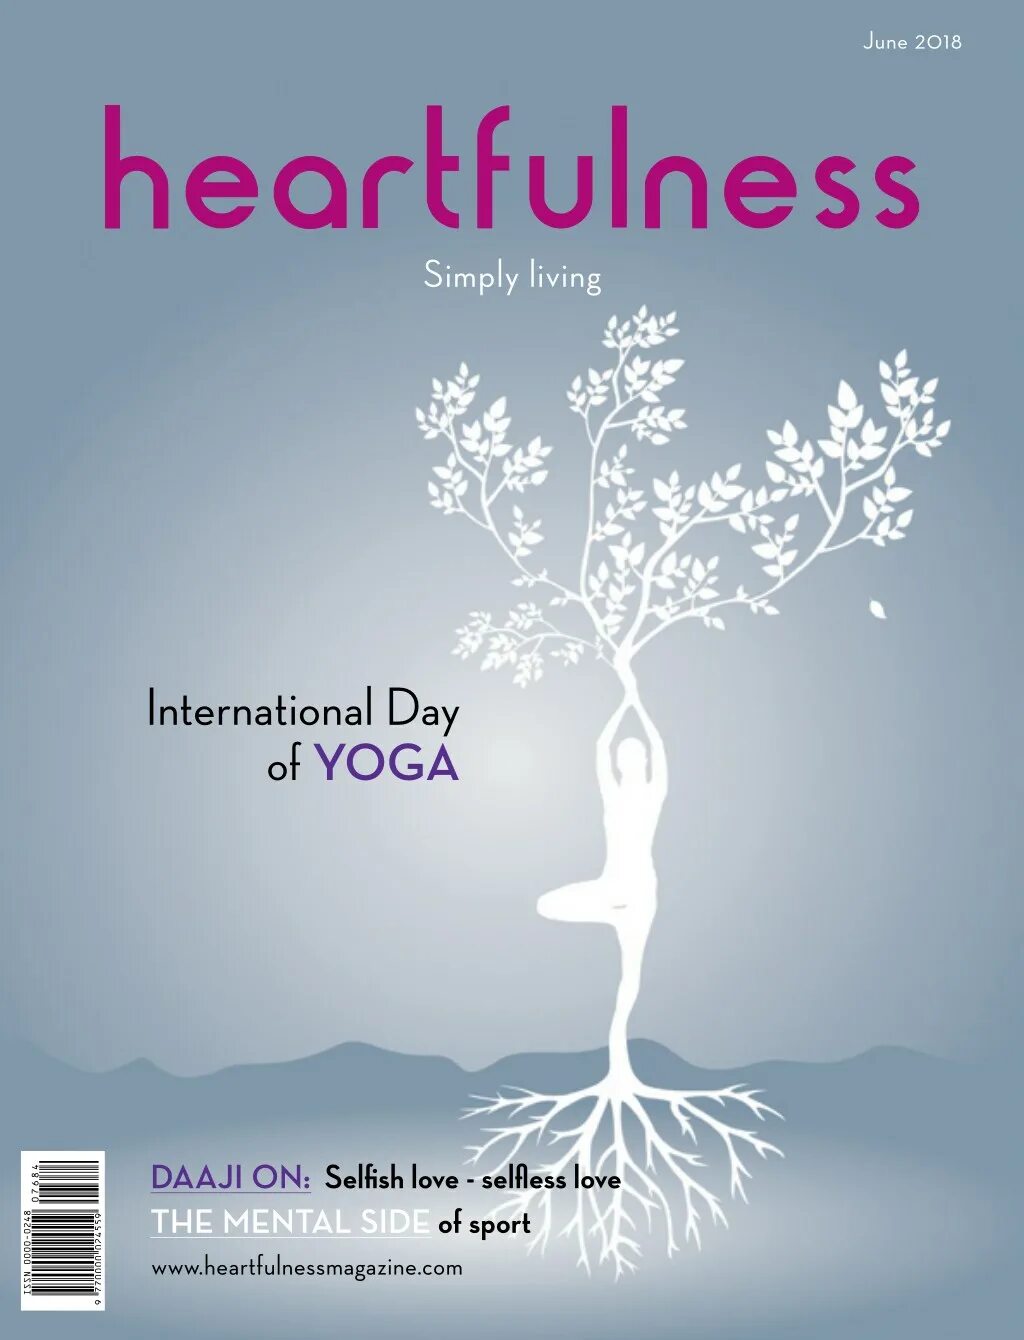 Йога Heartfulness. Медитация Heartfulness. Heartfulness Magazine. Институт медитации Heartfulness. Simply living